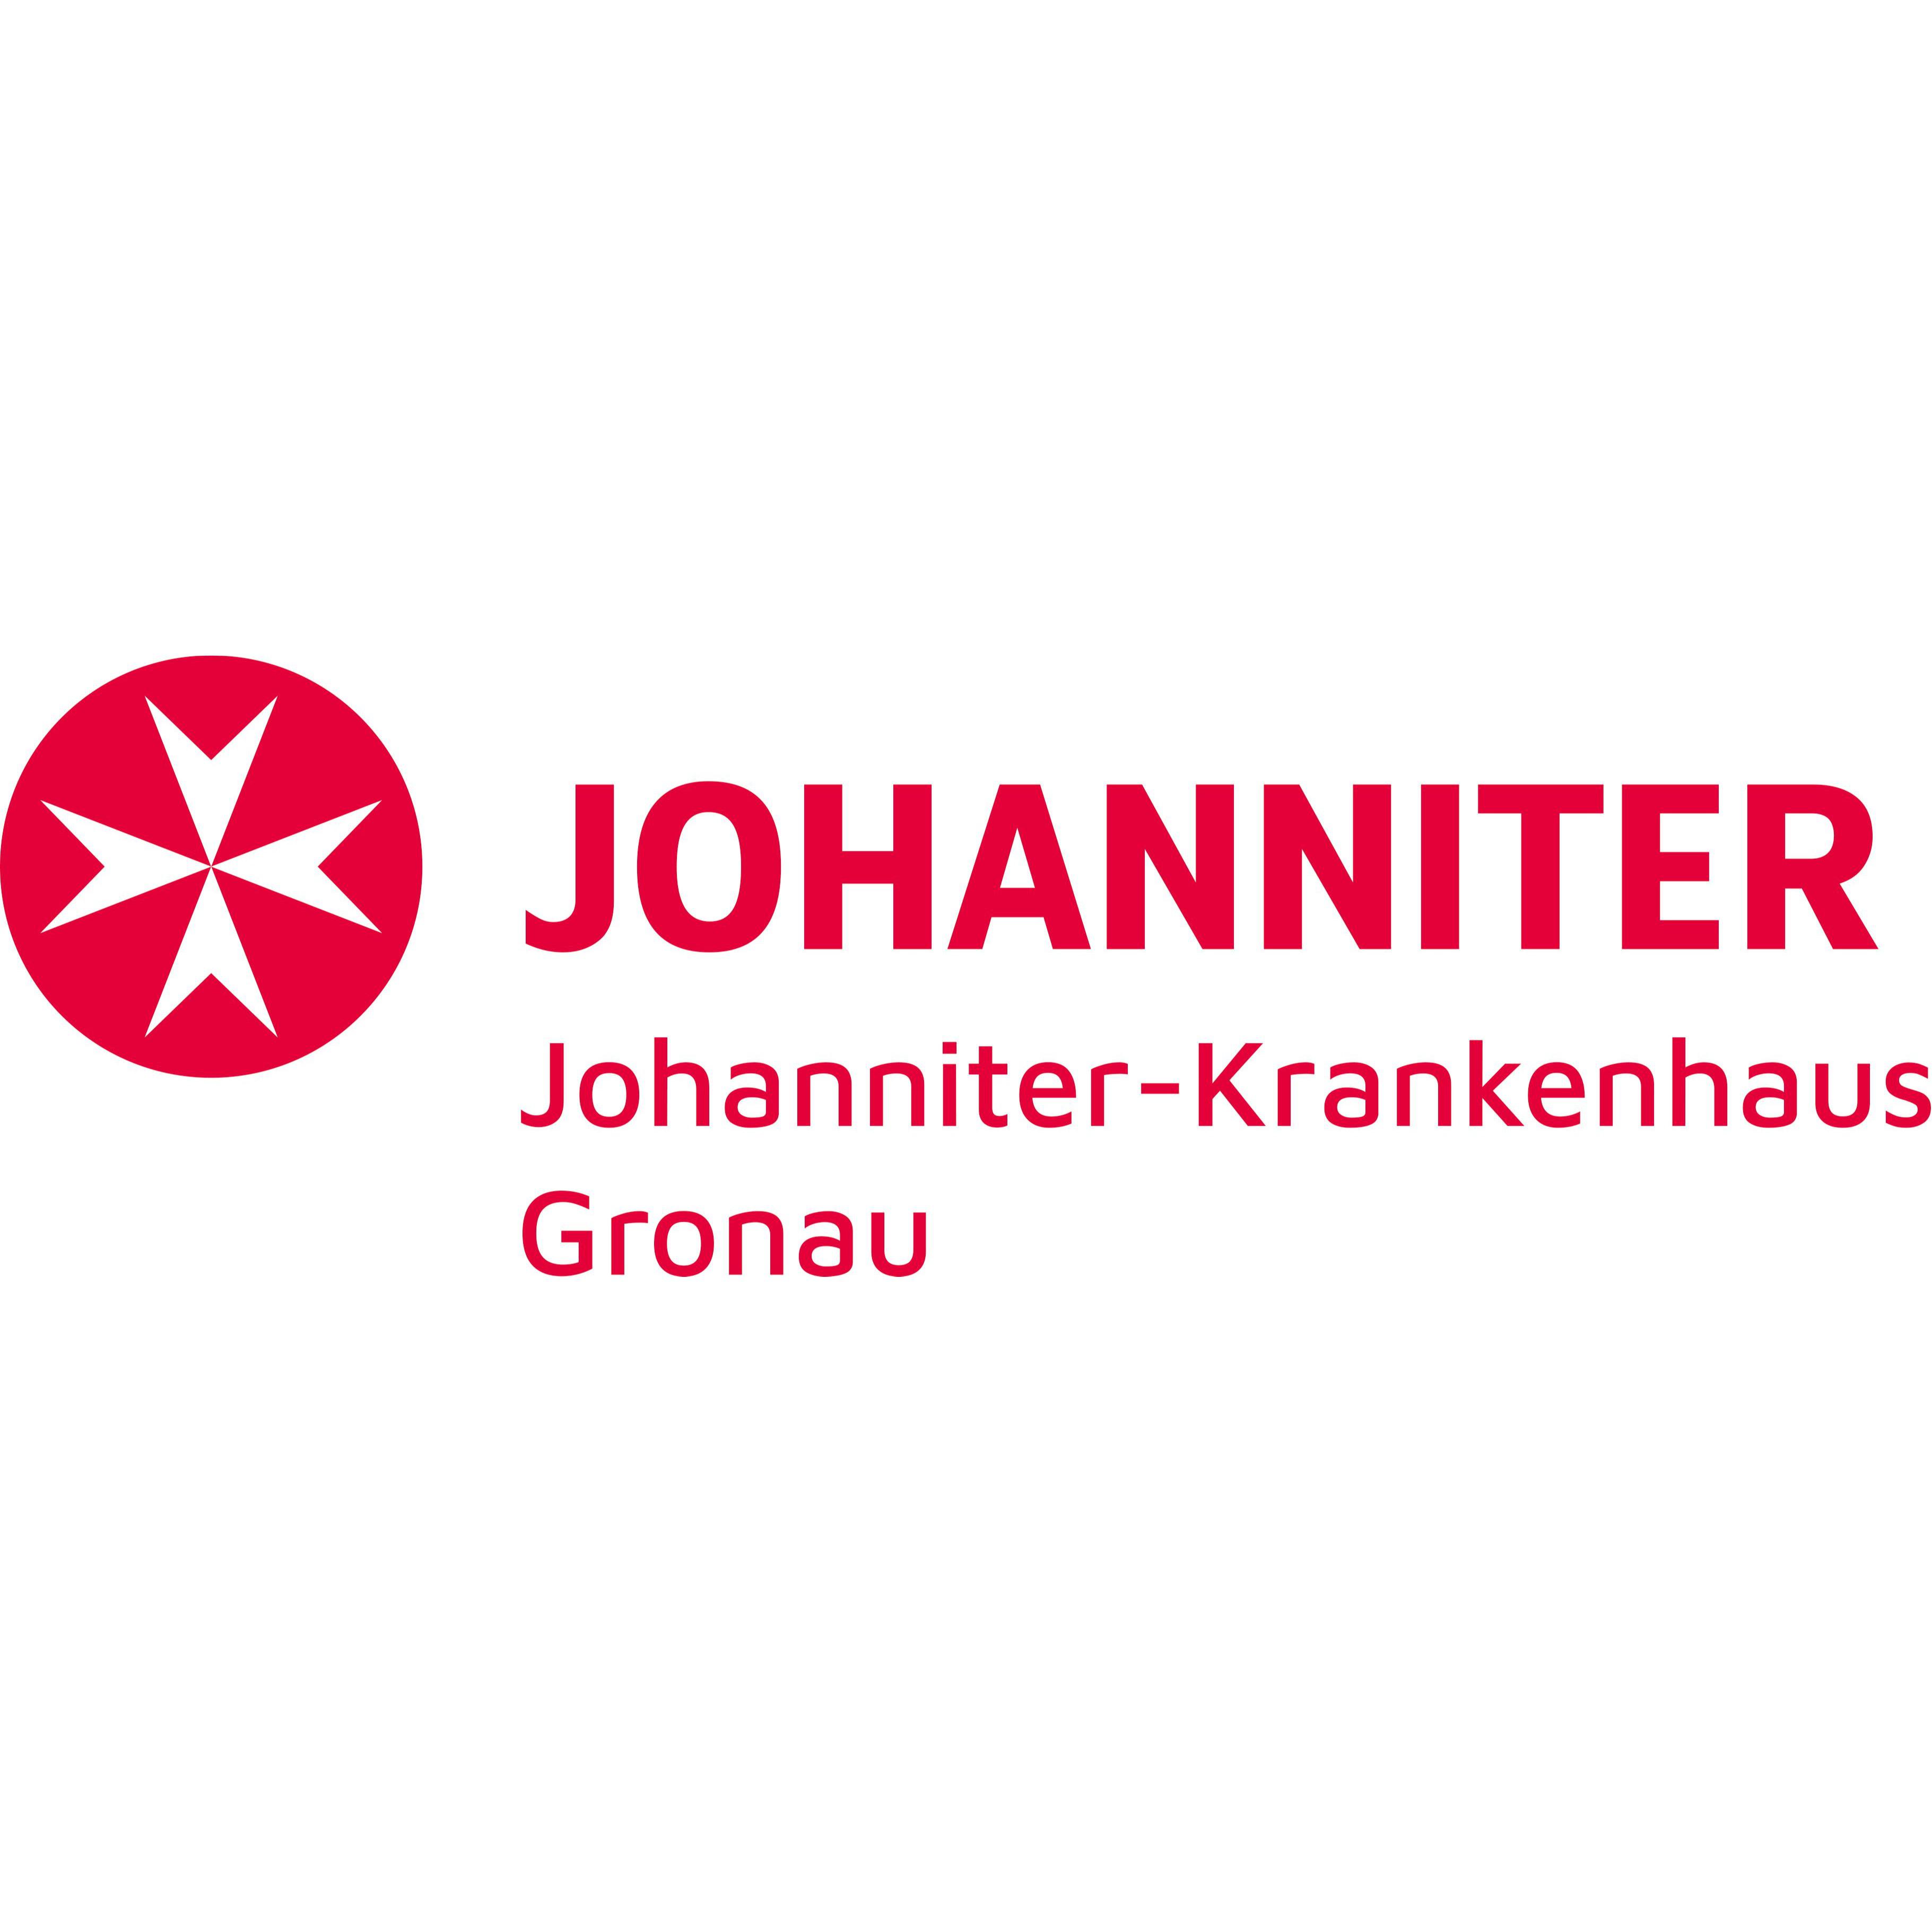 Johanniter-Krankenhaus Gronau in Gronau an der Leine - Logo